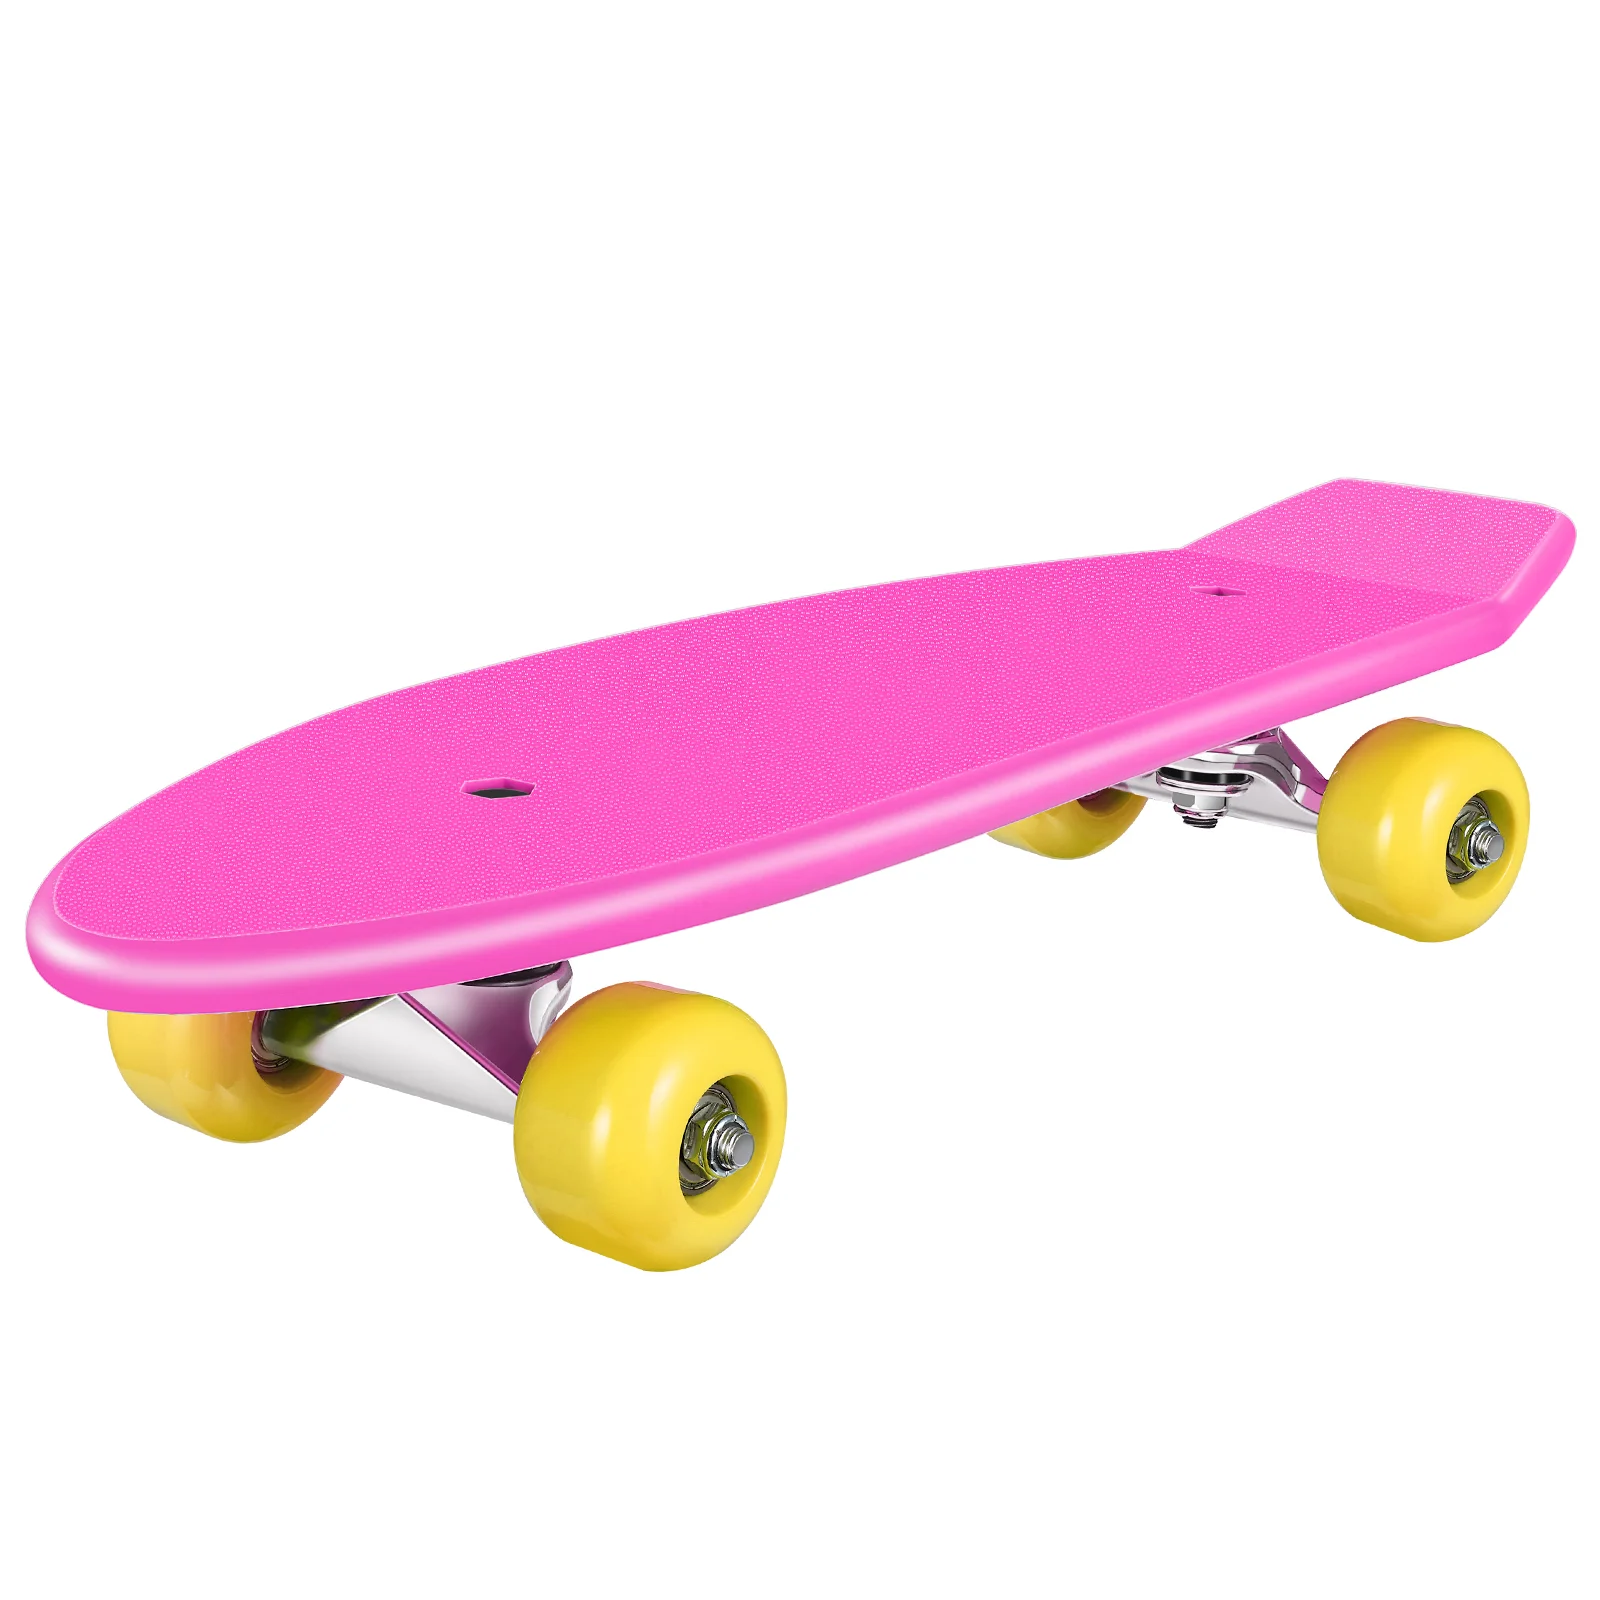 Longboard Skateboard Skateboard Indoor Complete Longboard Street Complete Longboard 4 Wheels Skateboard Kids Skateboard Child